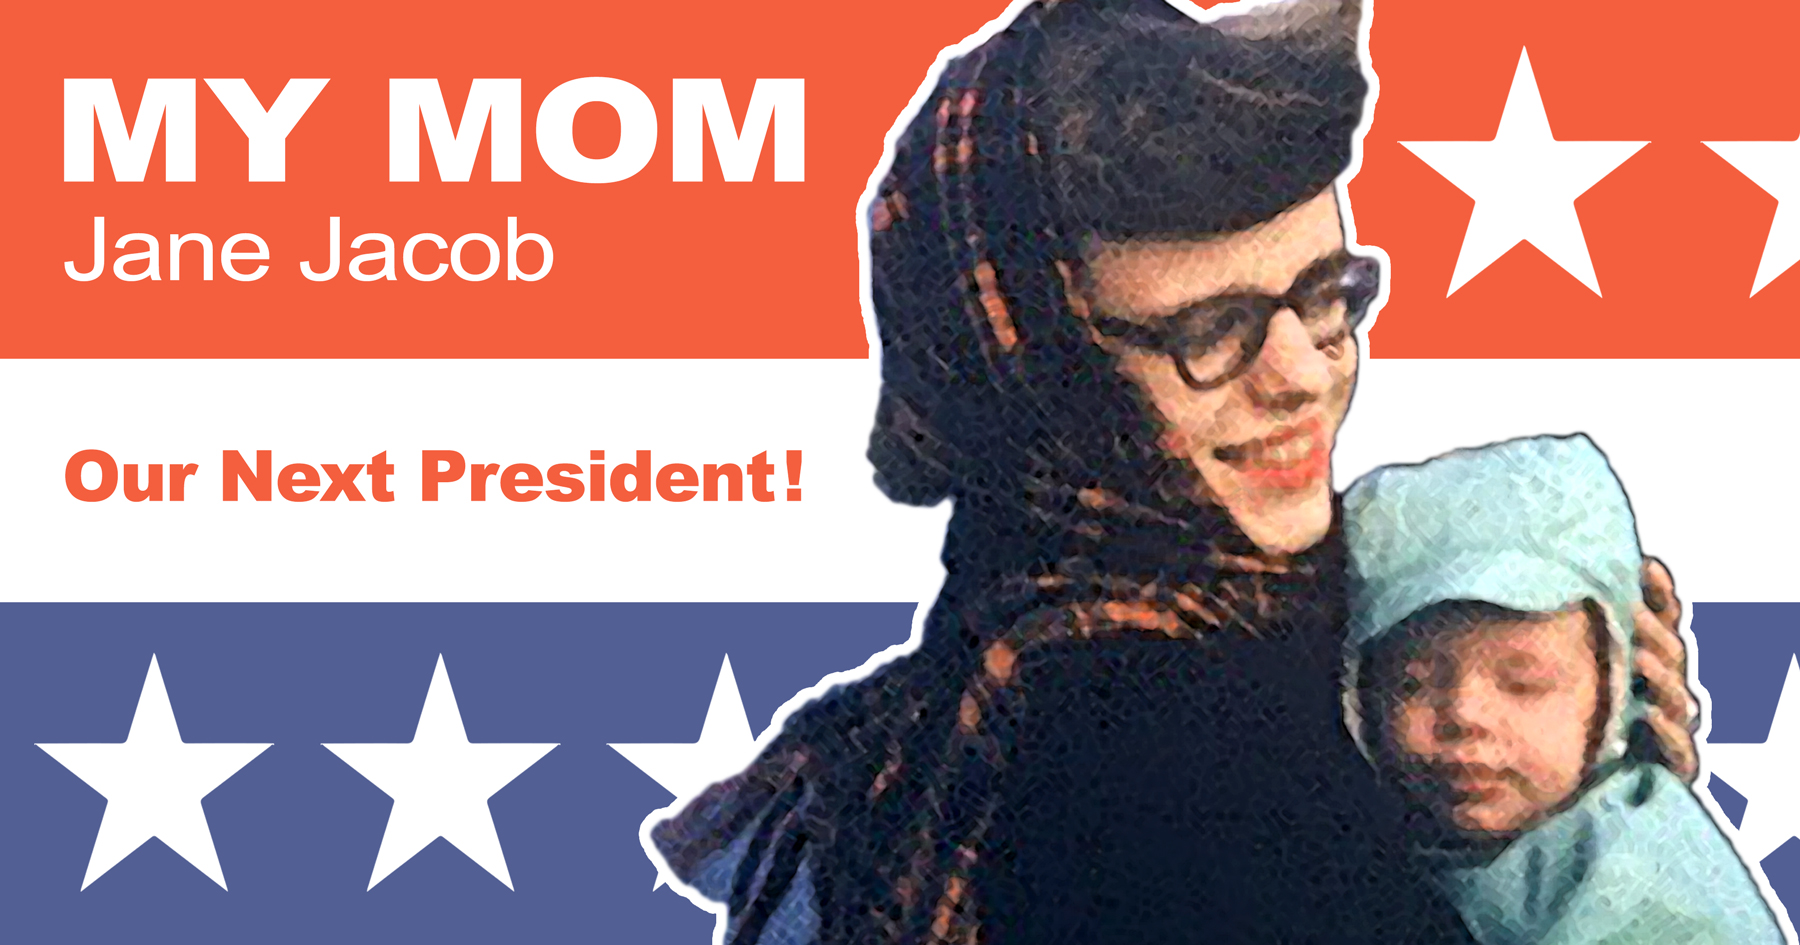 My mom for president